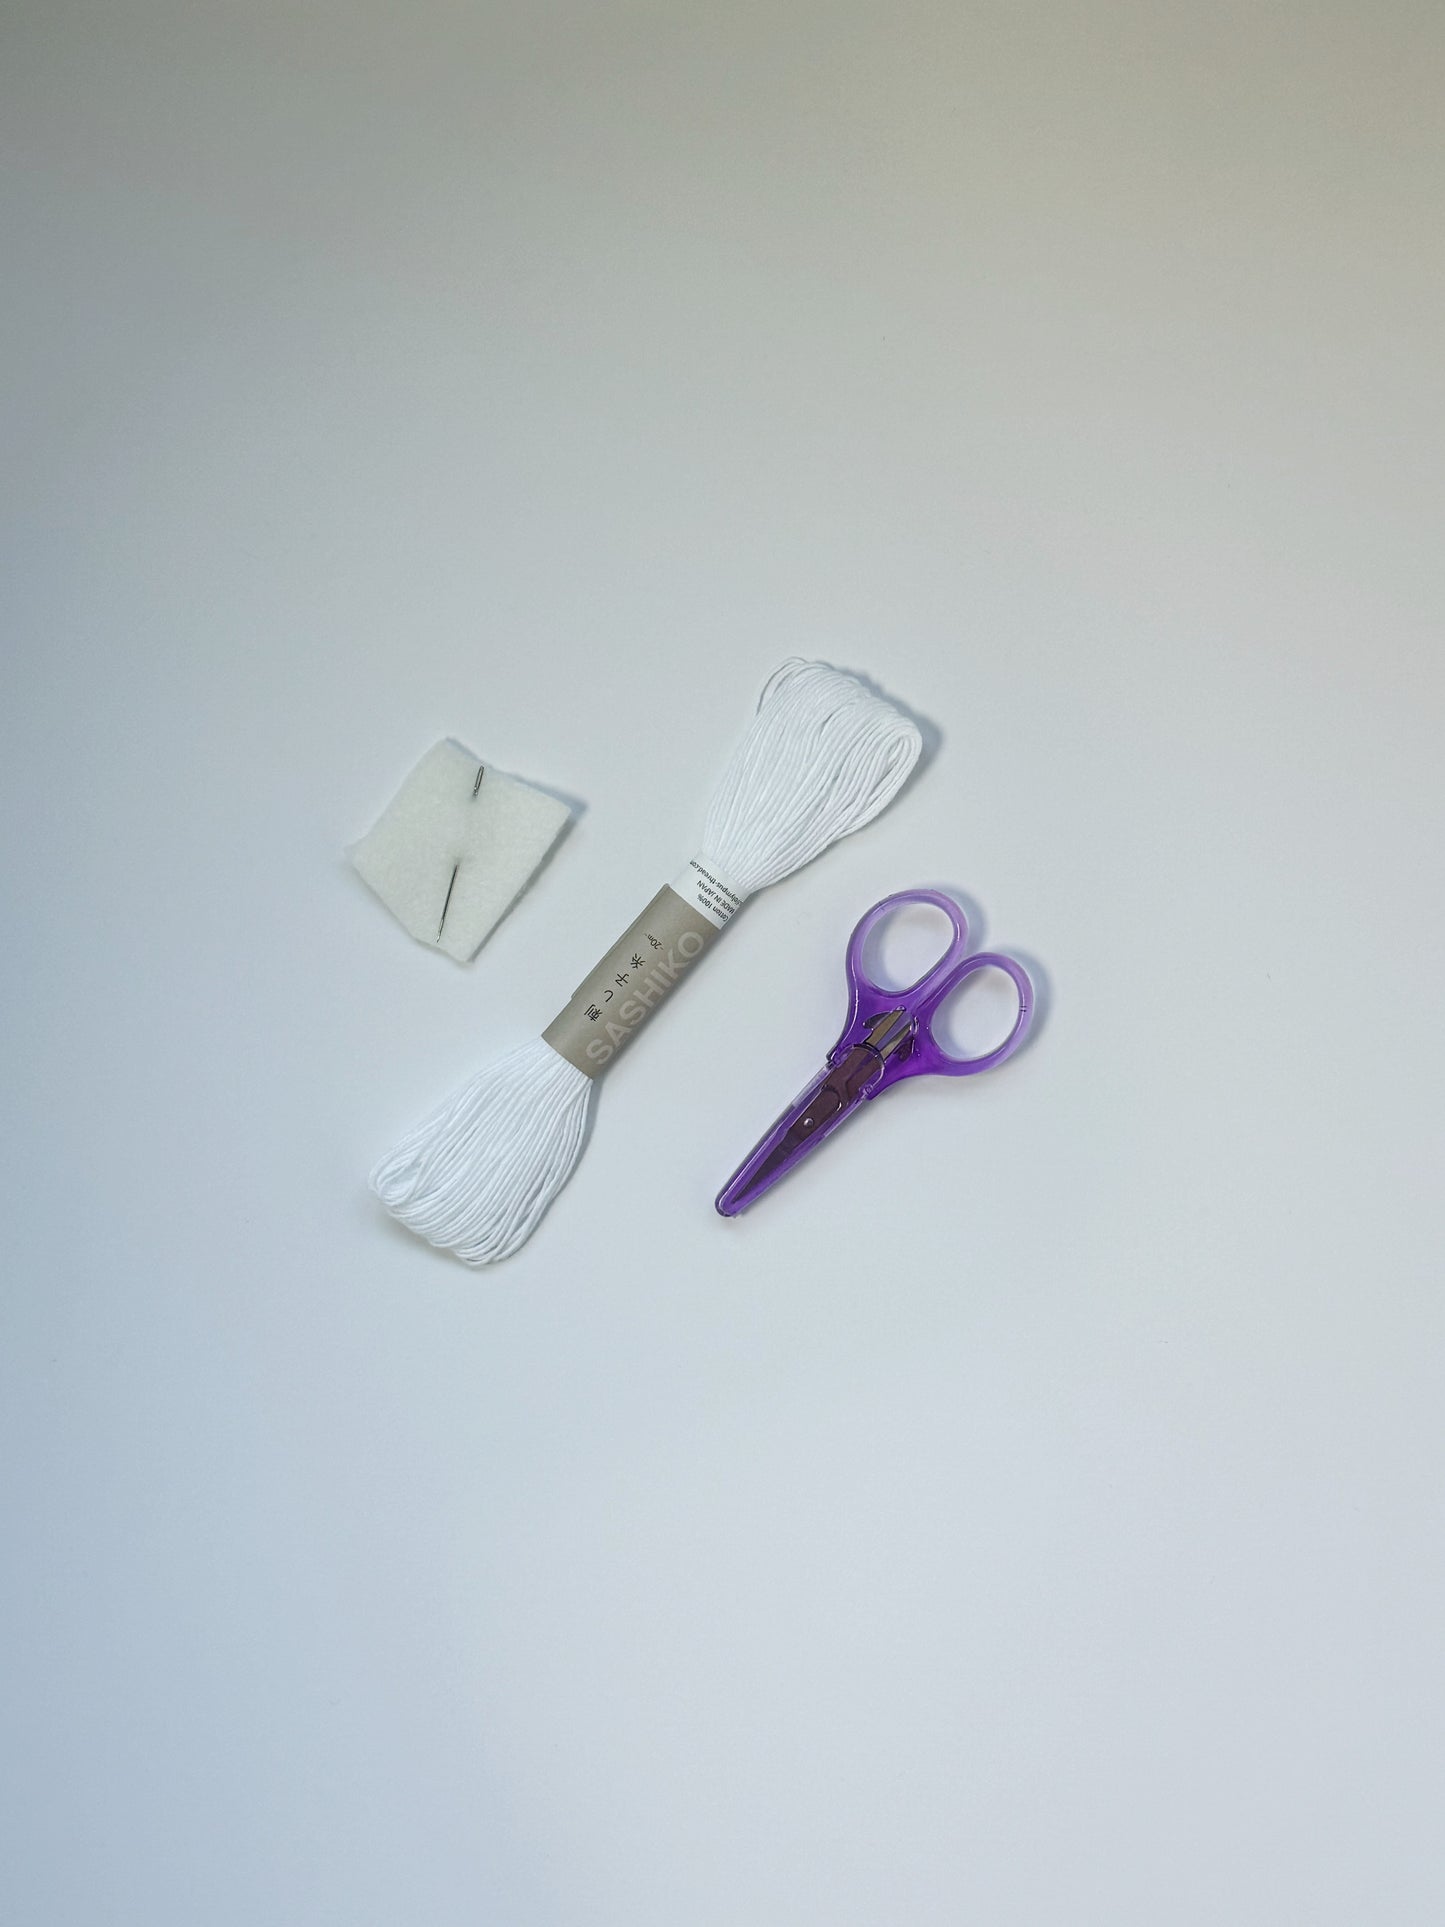 Sashiko Inspired Stick ‘n Stitch Mending Kit